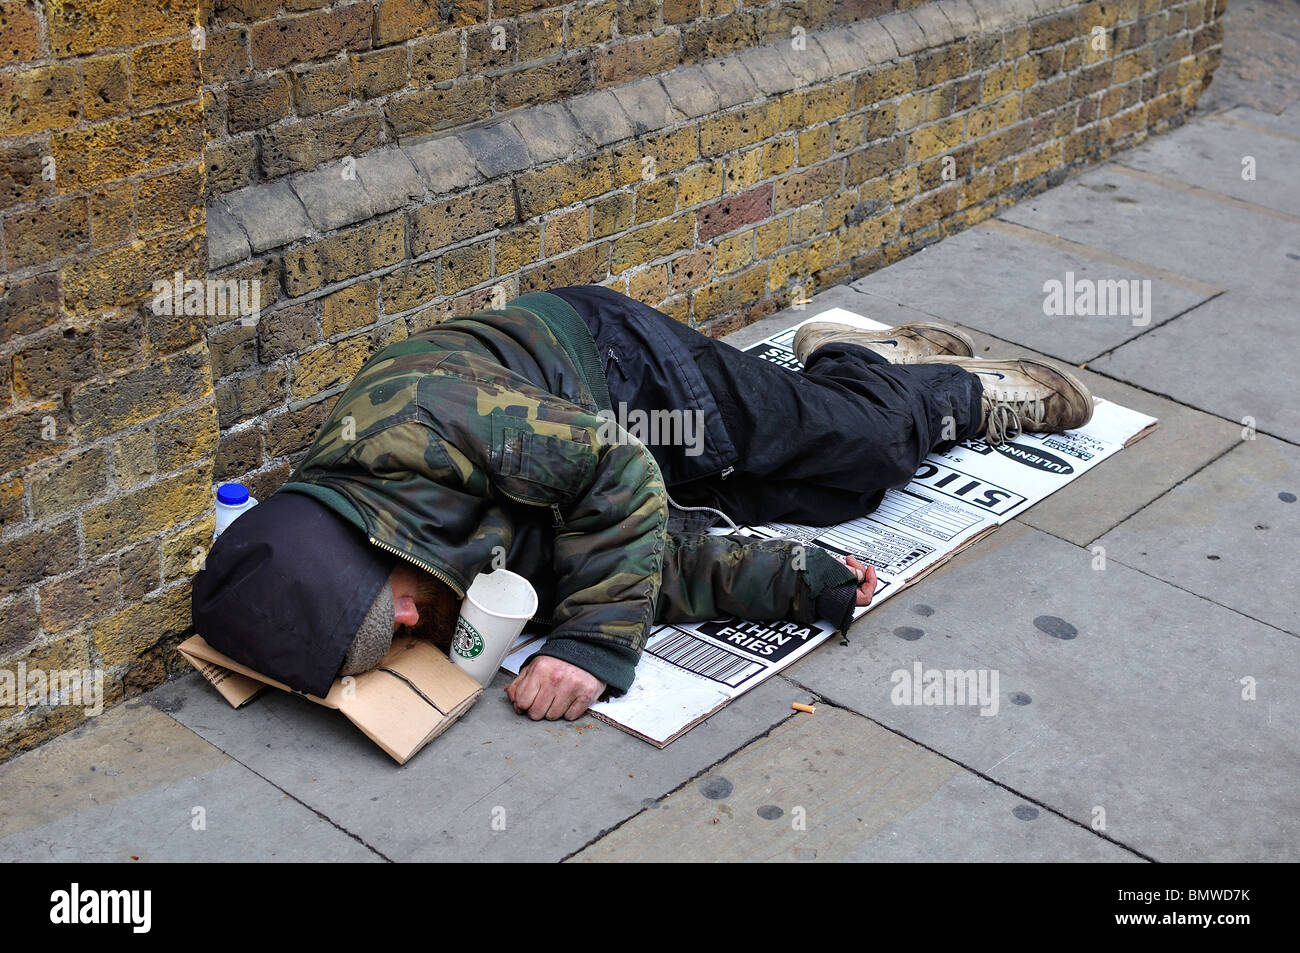 homeless-man-sleeping-on-pavement-in-london-BMWD7K.jpg